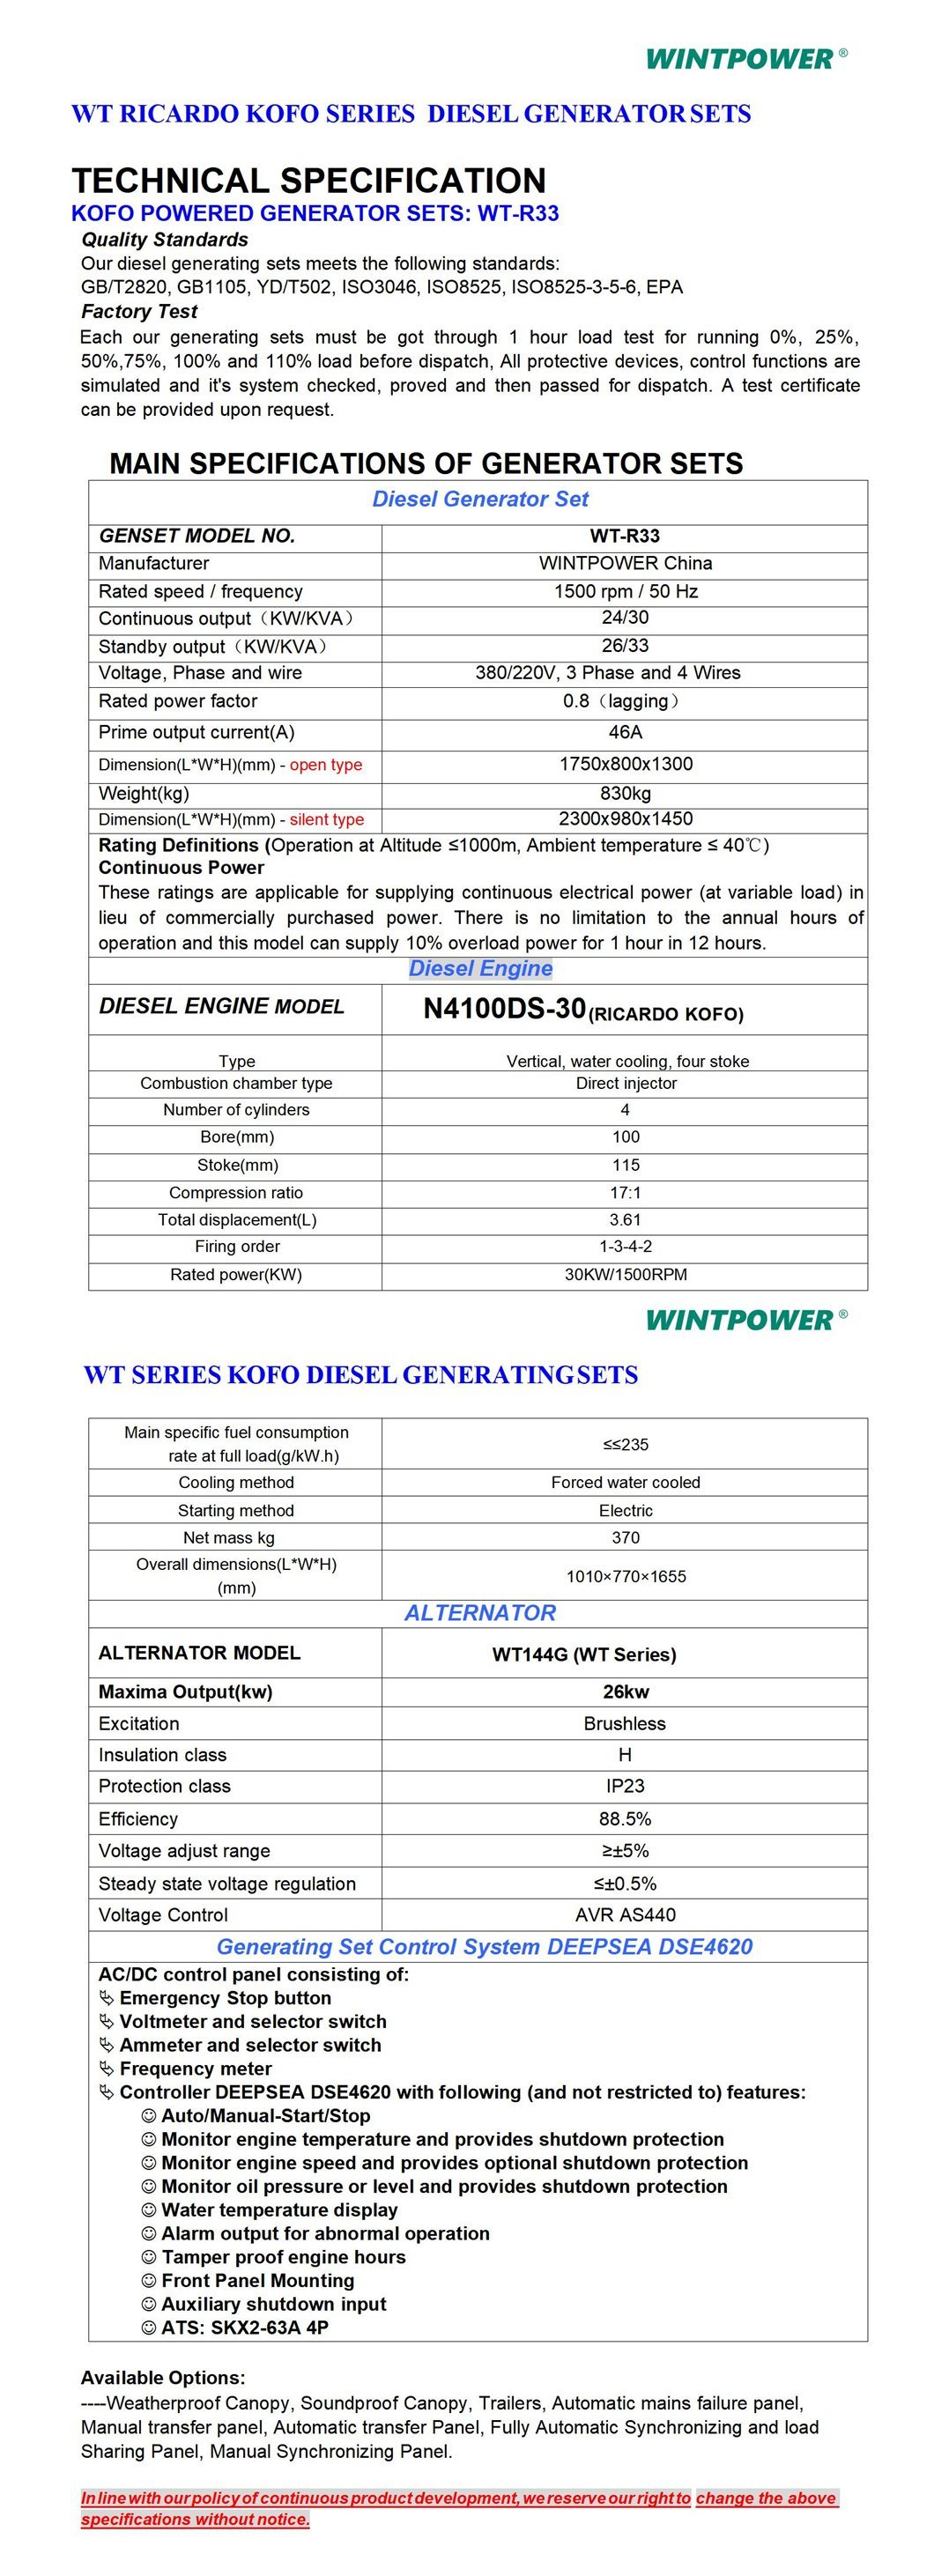 Weichai Kofo Ricardo Diesel Power Generator Set Dg Genset 30kVA N4100ds-30 40kVA N4105ds-38 50kVA N4105ds-42 60kVA N4105zds 75kVA N4105zds 83kVA R4105bzlds